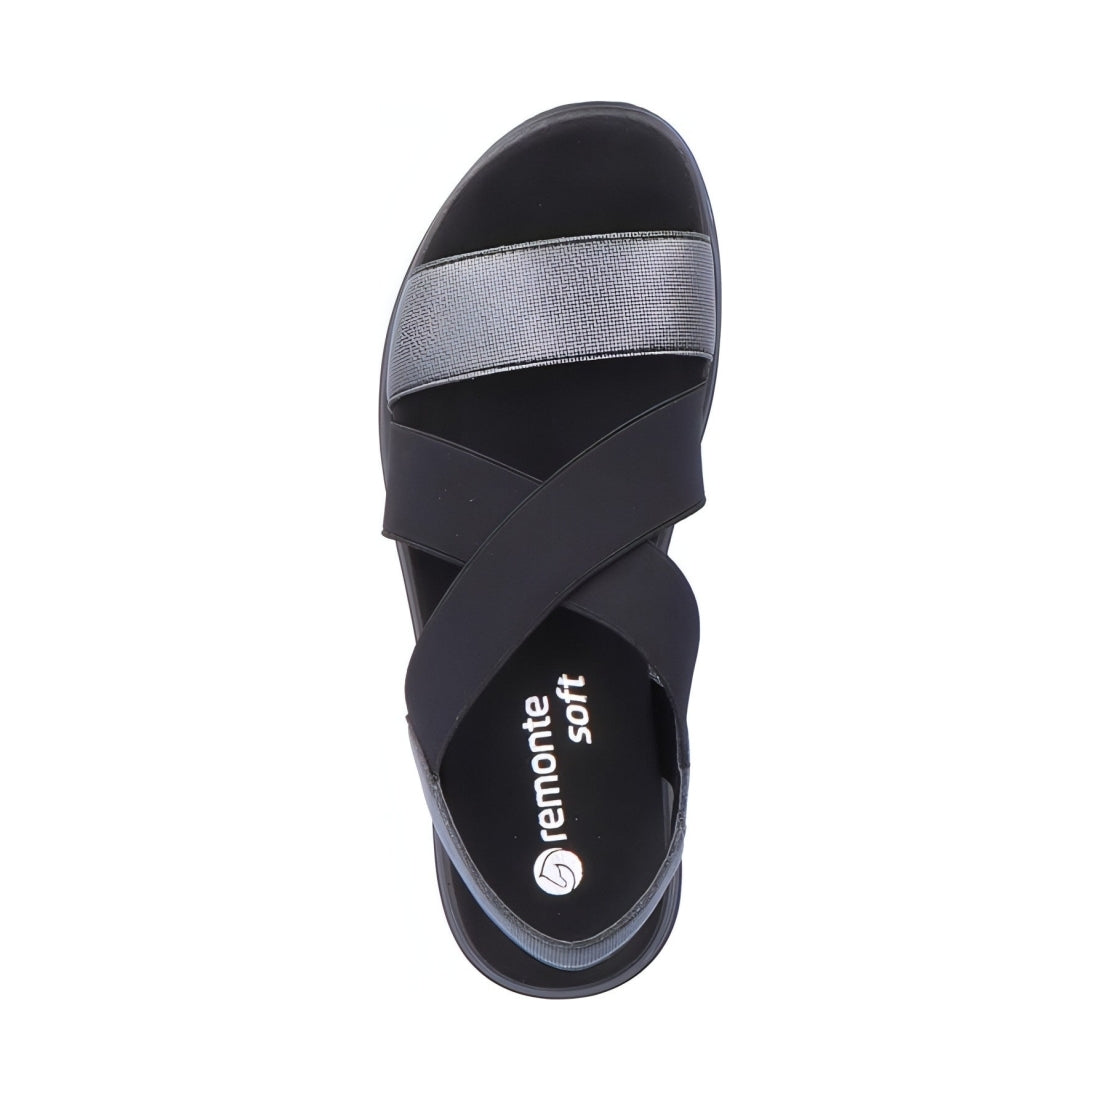 Remonte womens black casual open sandals | Vilbury London